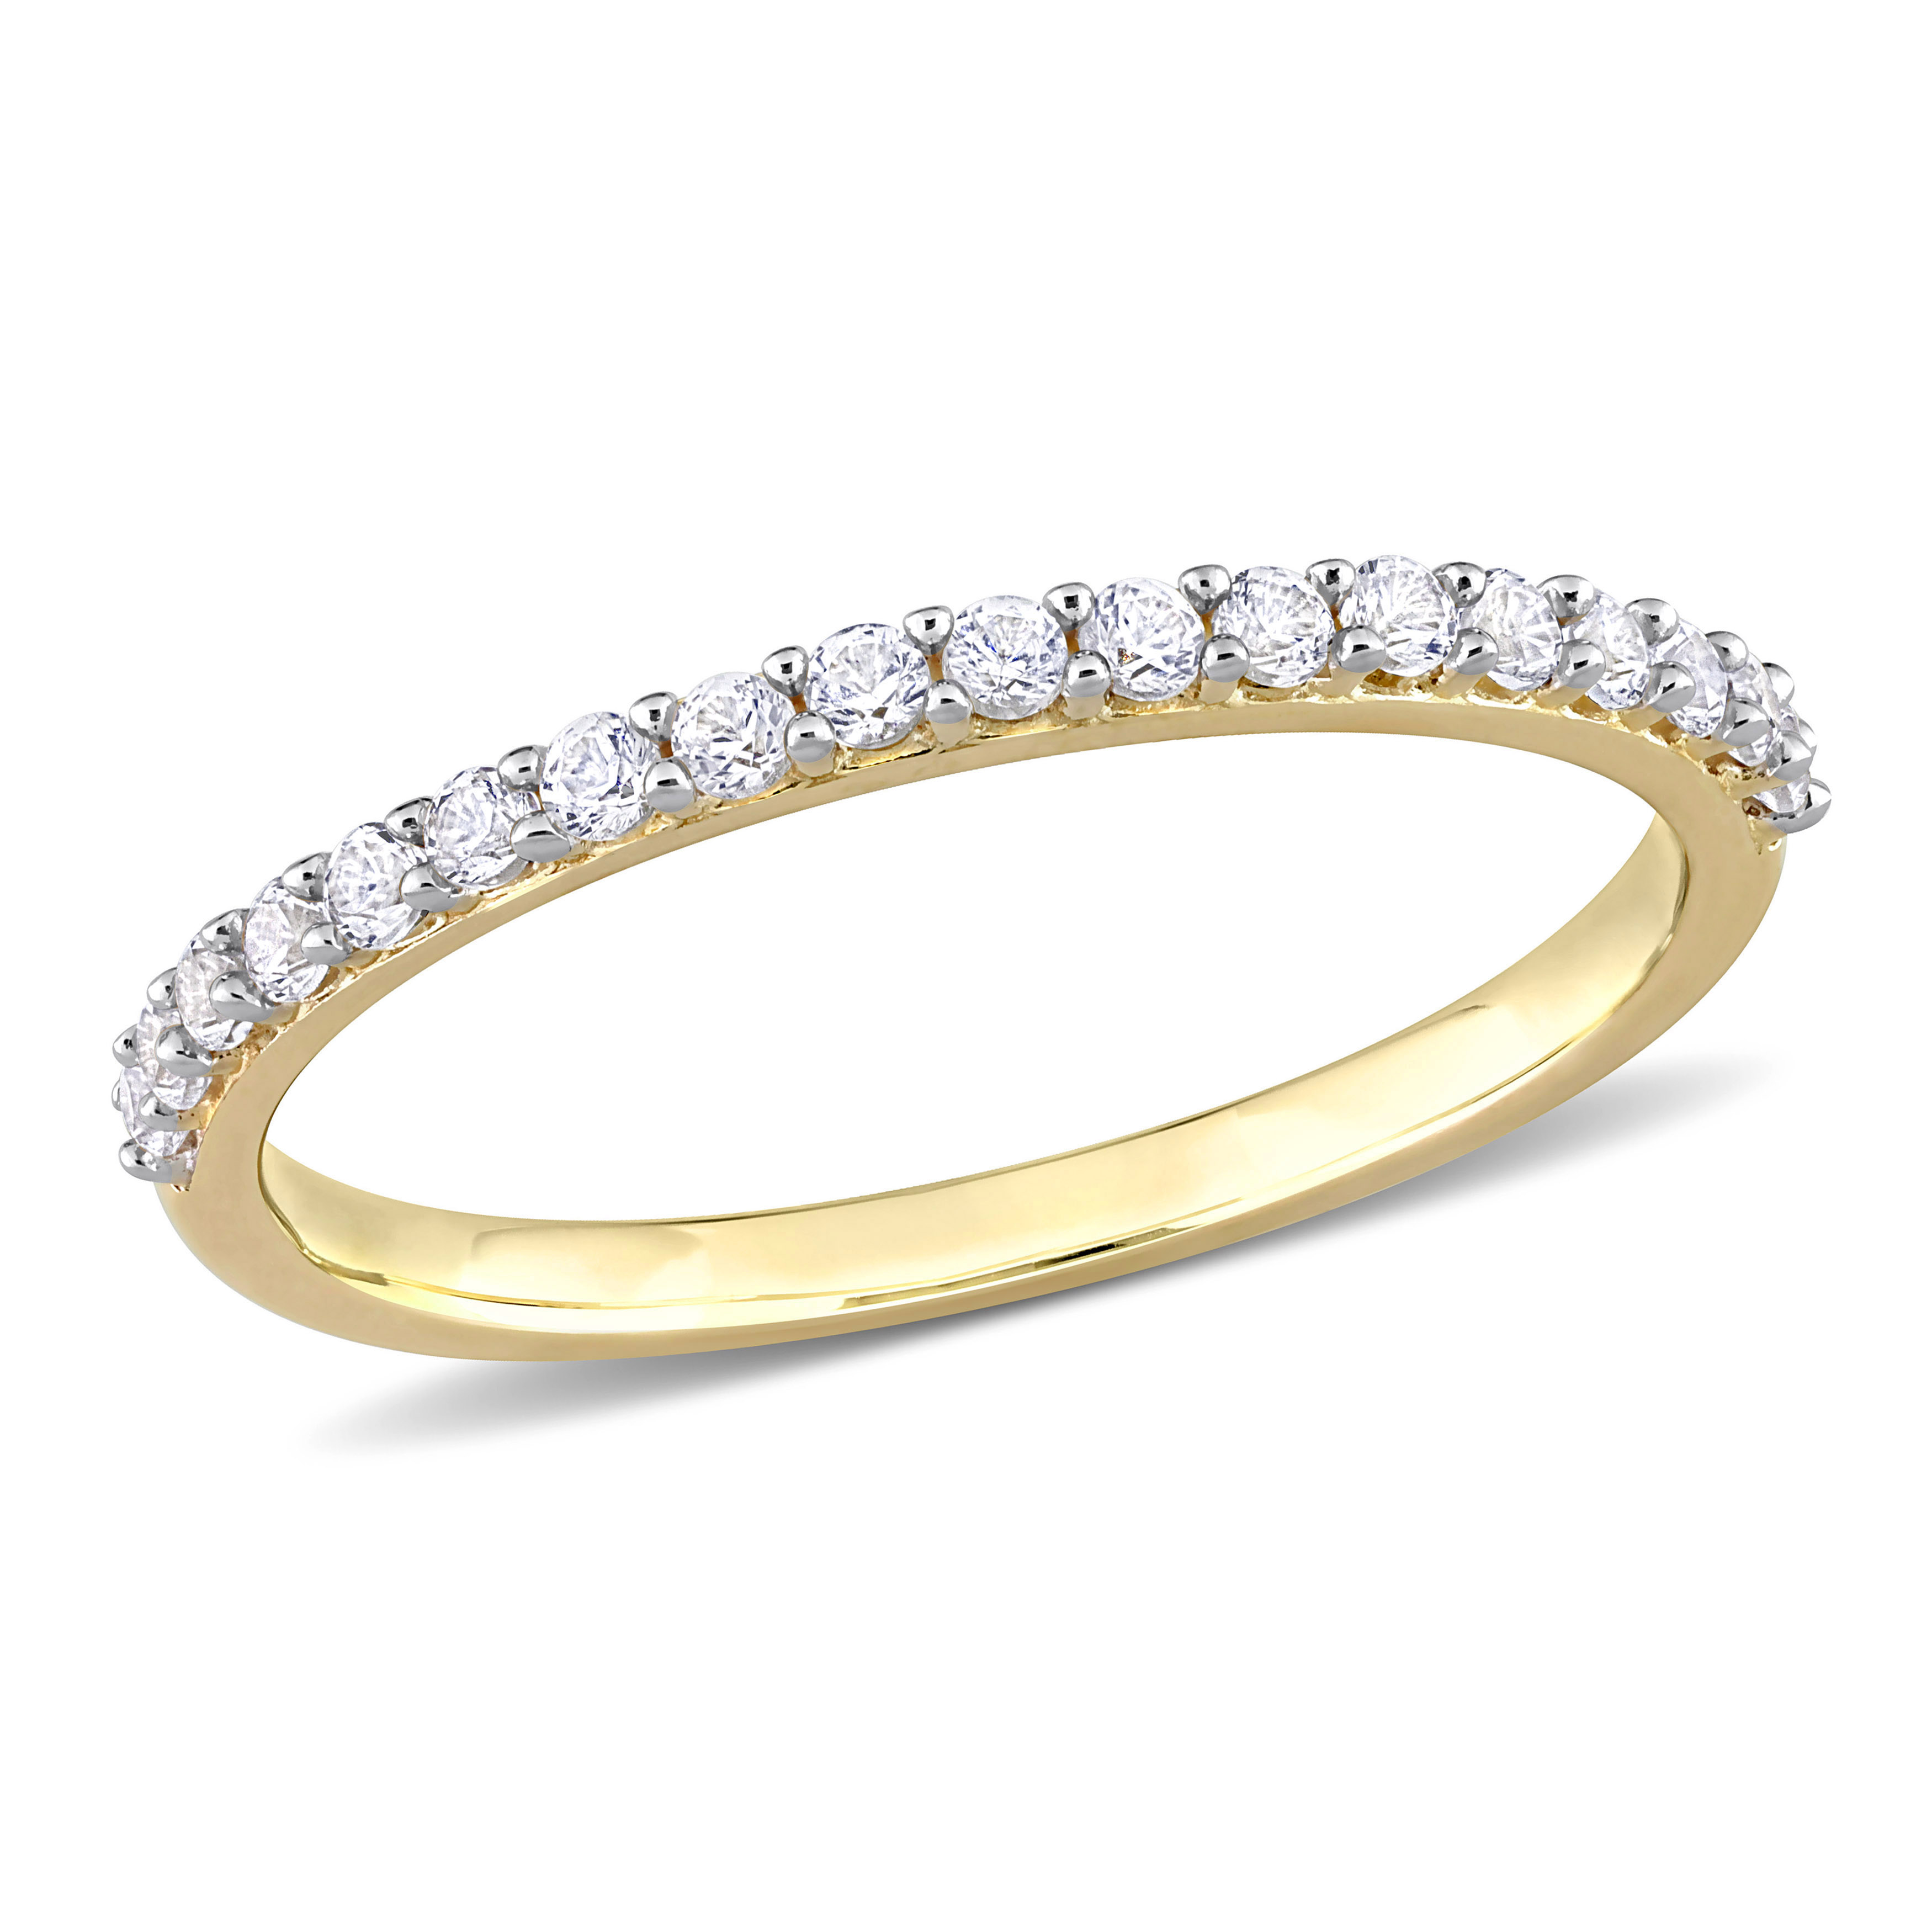 3/8 CT TGW Created White Sapphire Semi-Eternity Ring in 10k Yellow Gold